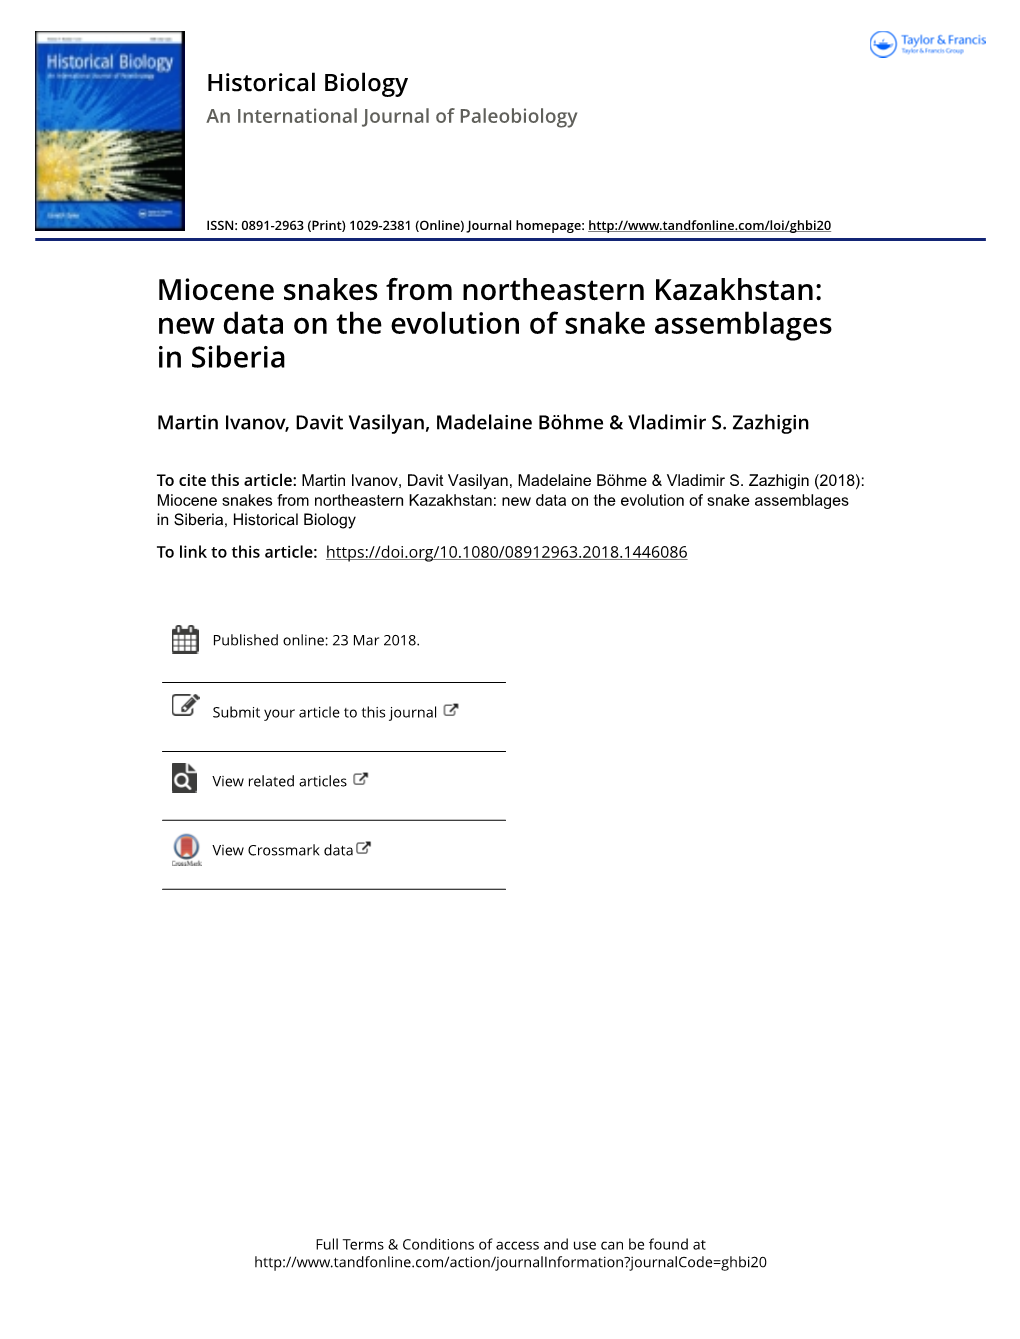 Miocene Snakes from Northeastern Kazakhstan: New Data on the Evolution of Snake Assemblages in Siberia